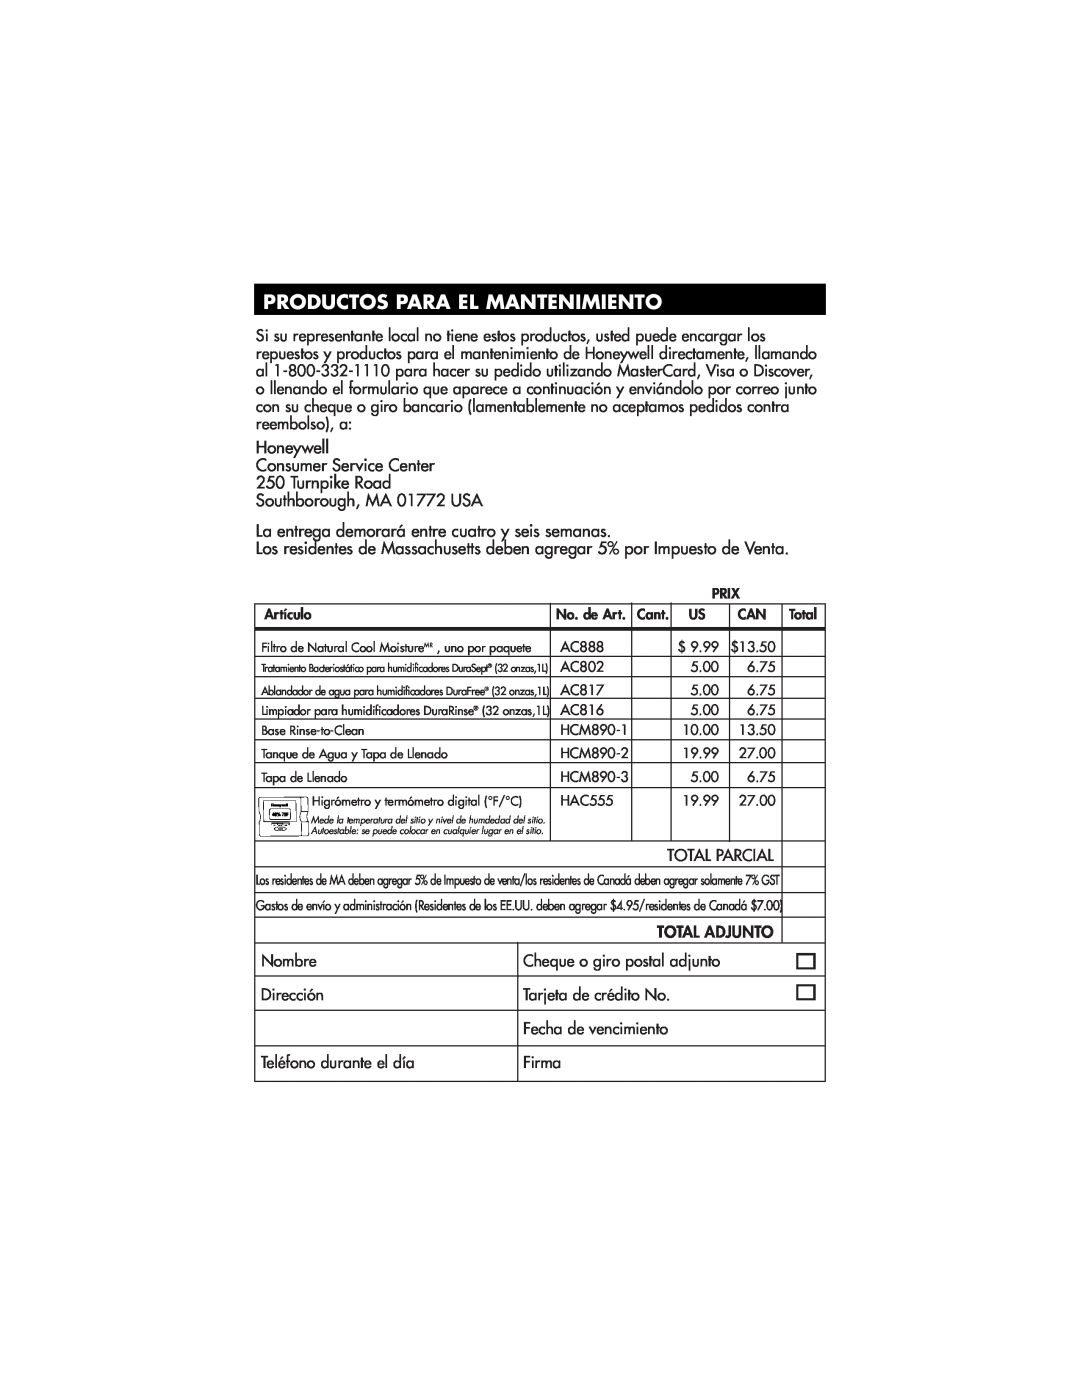 Honeywell HCM-890 owner manual Productos Para El Mantenimiento, Honeywell Consumer Service Center 